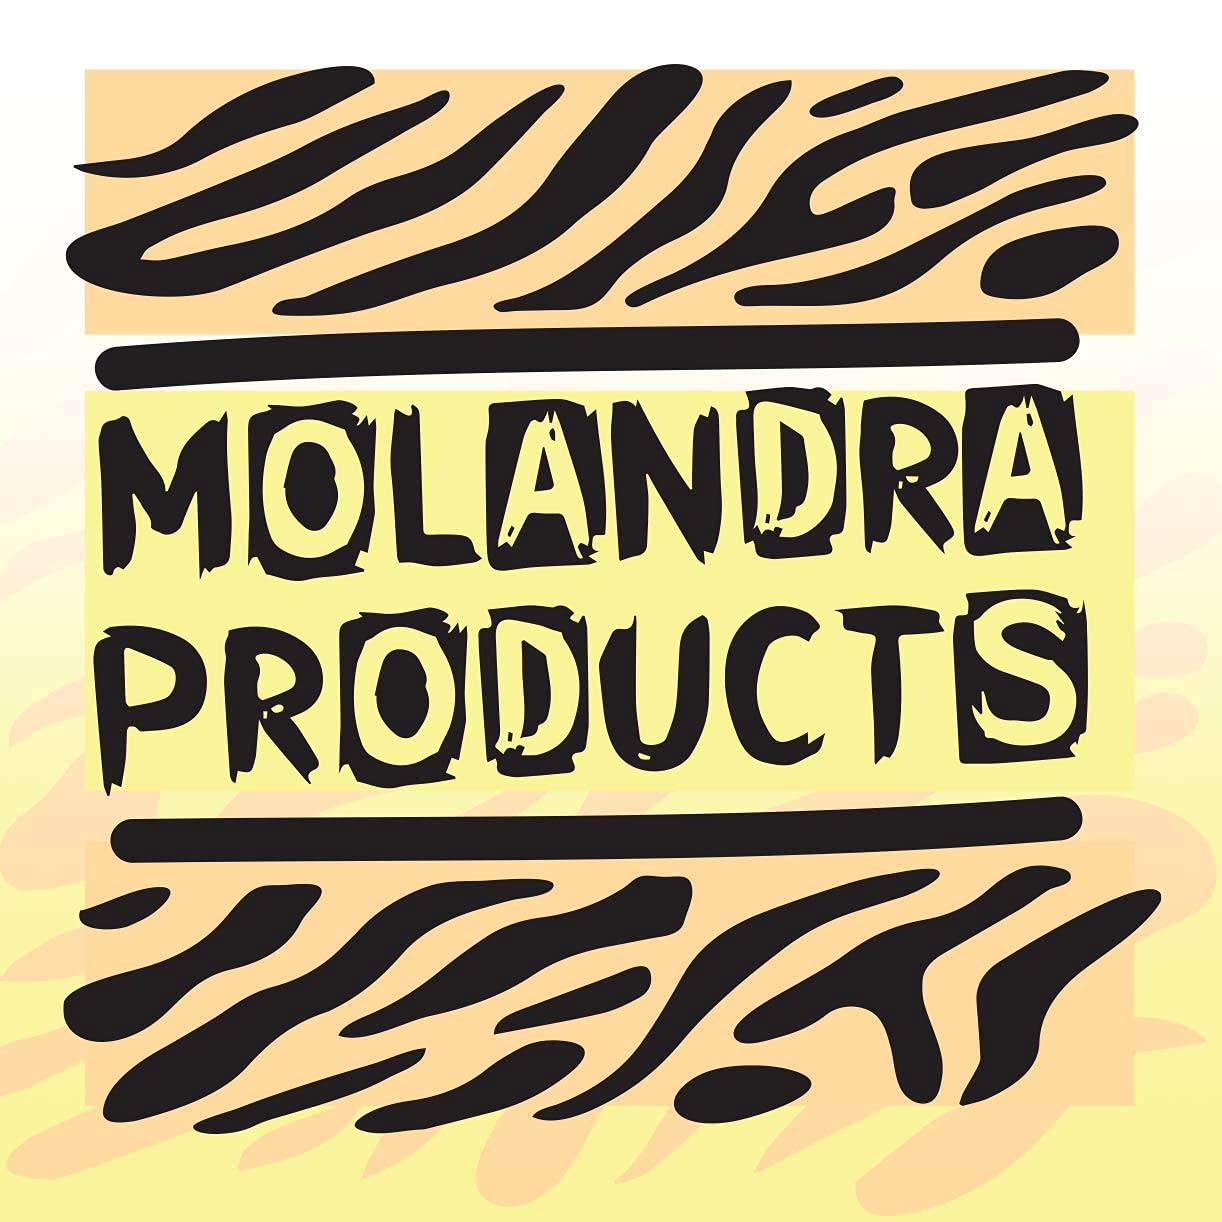 Molandra Products Back That Thing Up - 14oz Stainless Steel Travel Mug, White